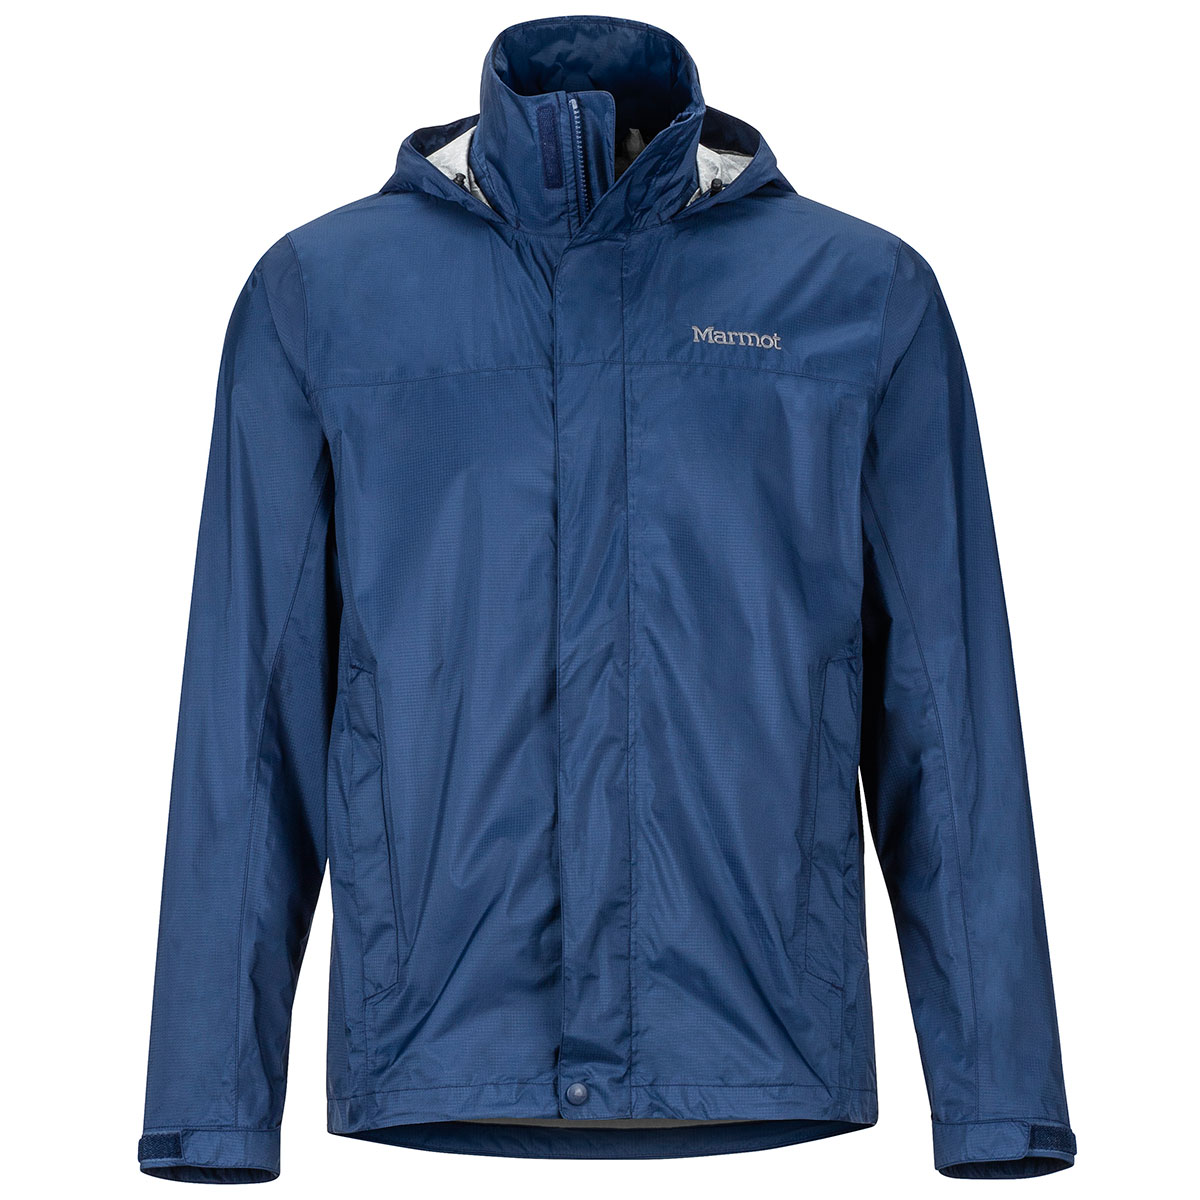 Marmot Men's Precip Eco Jacket - Blue, S